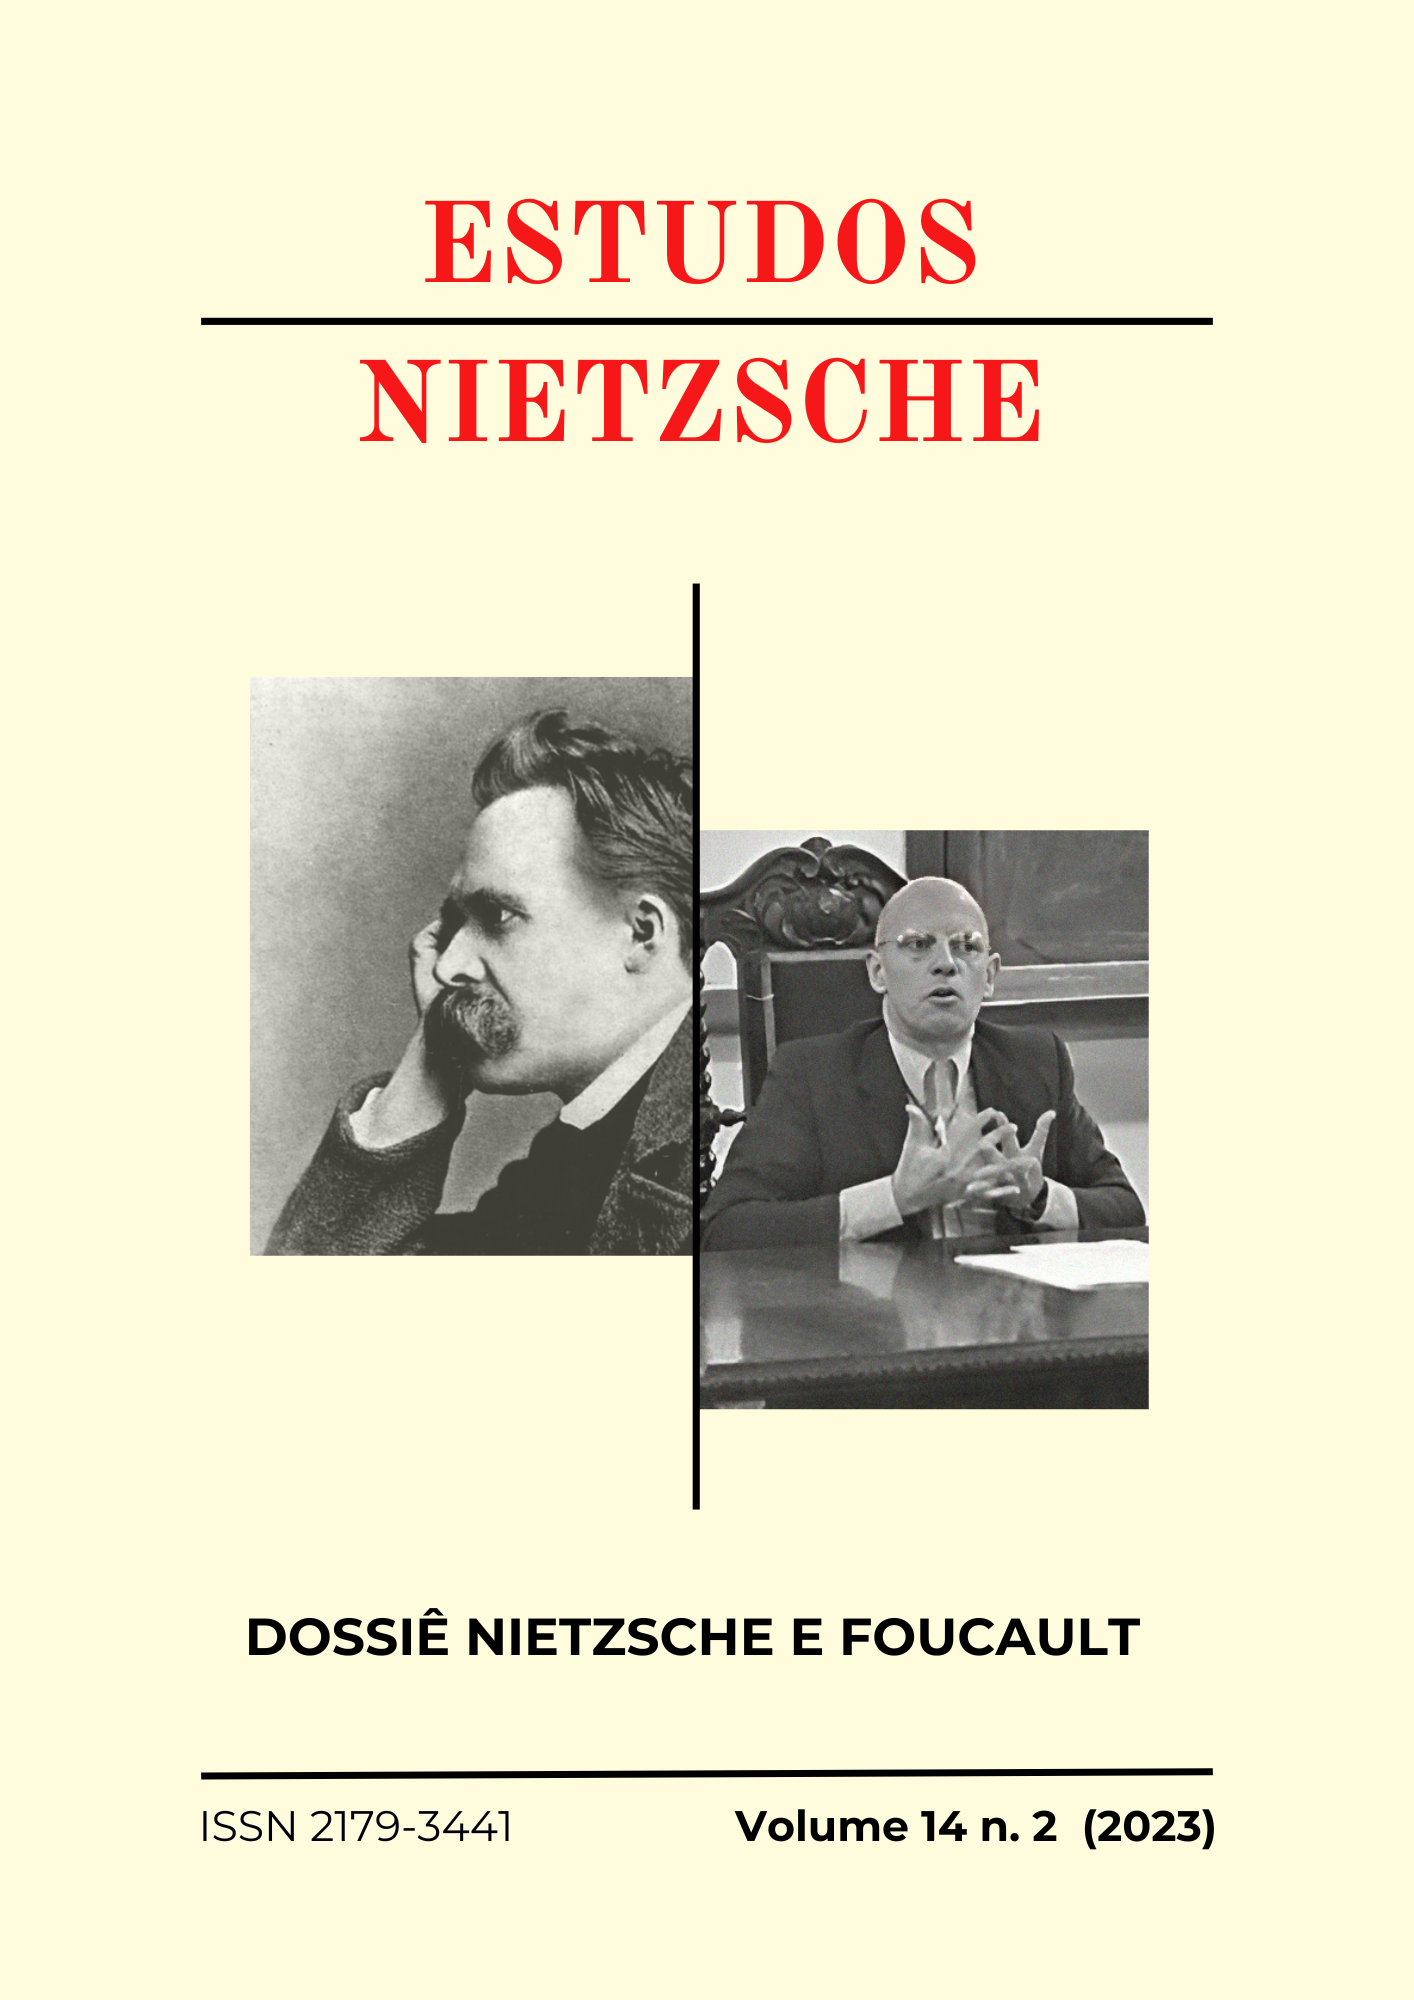 					Visualizar v. 14 n. 2 (2023): Leituras teórico-filosóficas Nietzsche-Foucault
				